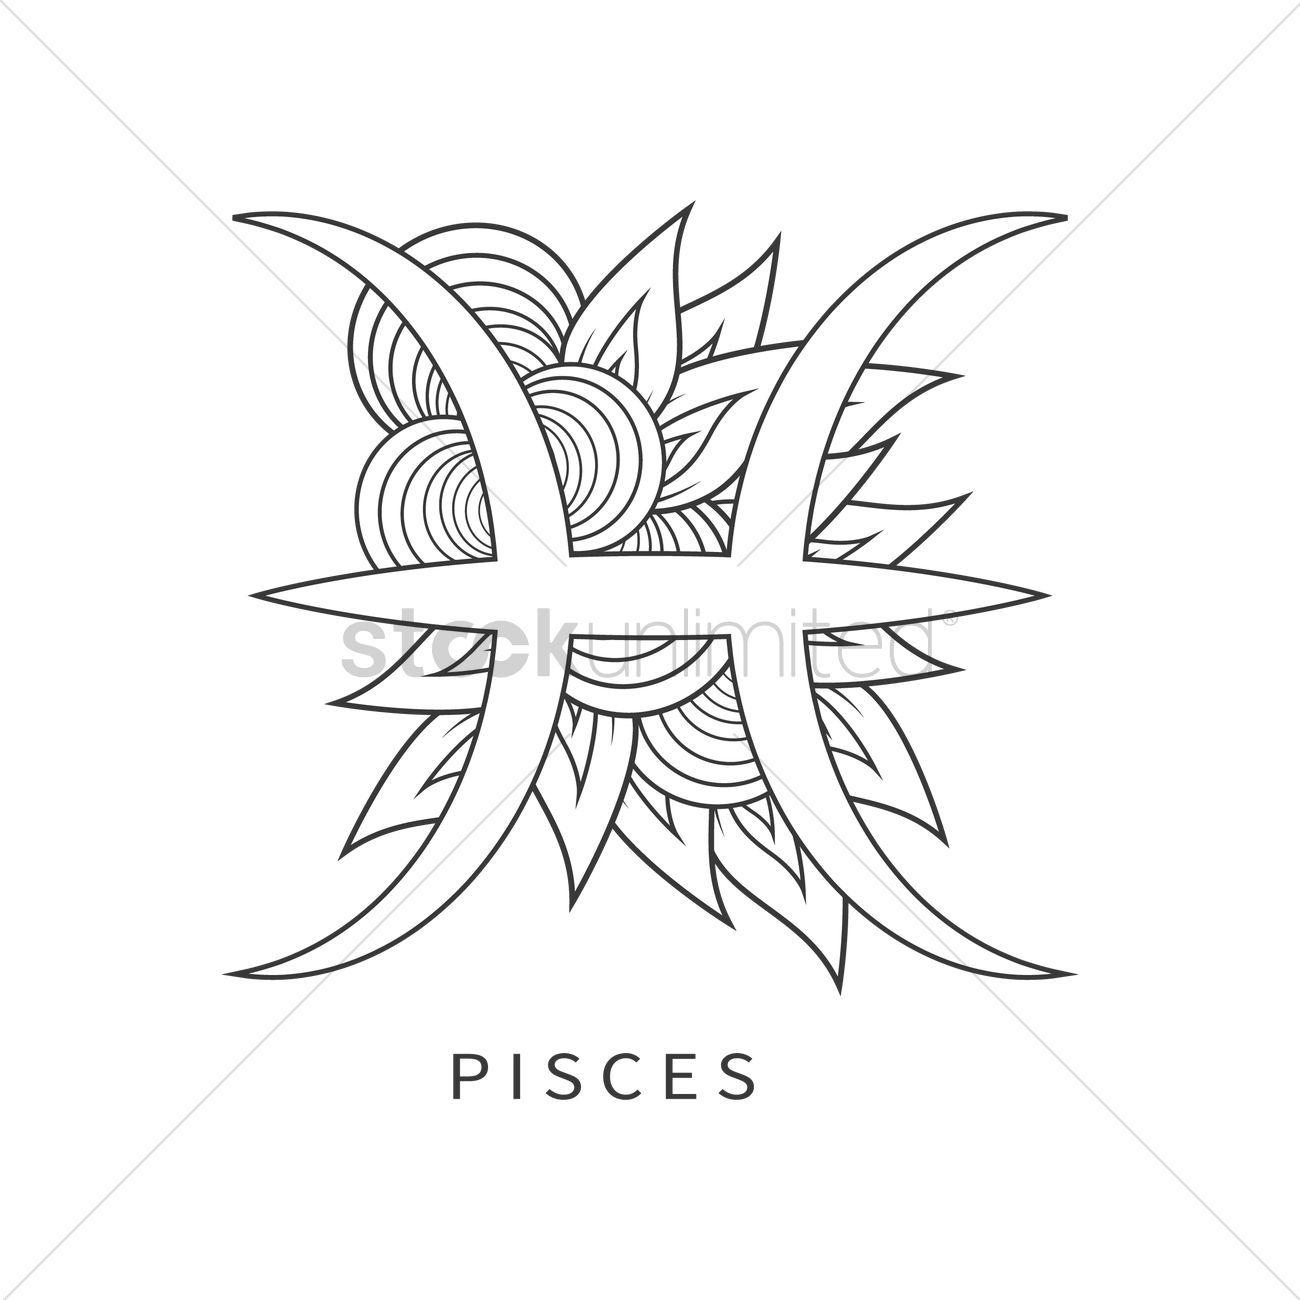 Pisces Logo - Pisces symbol Vector Image - 1964289 | StockUnlimited